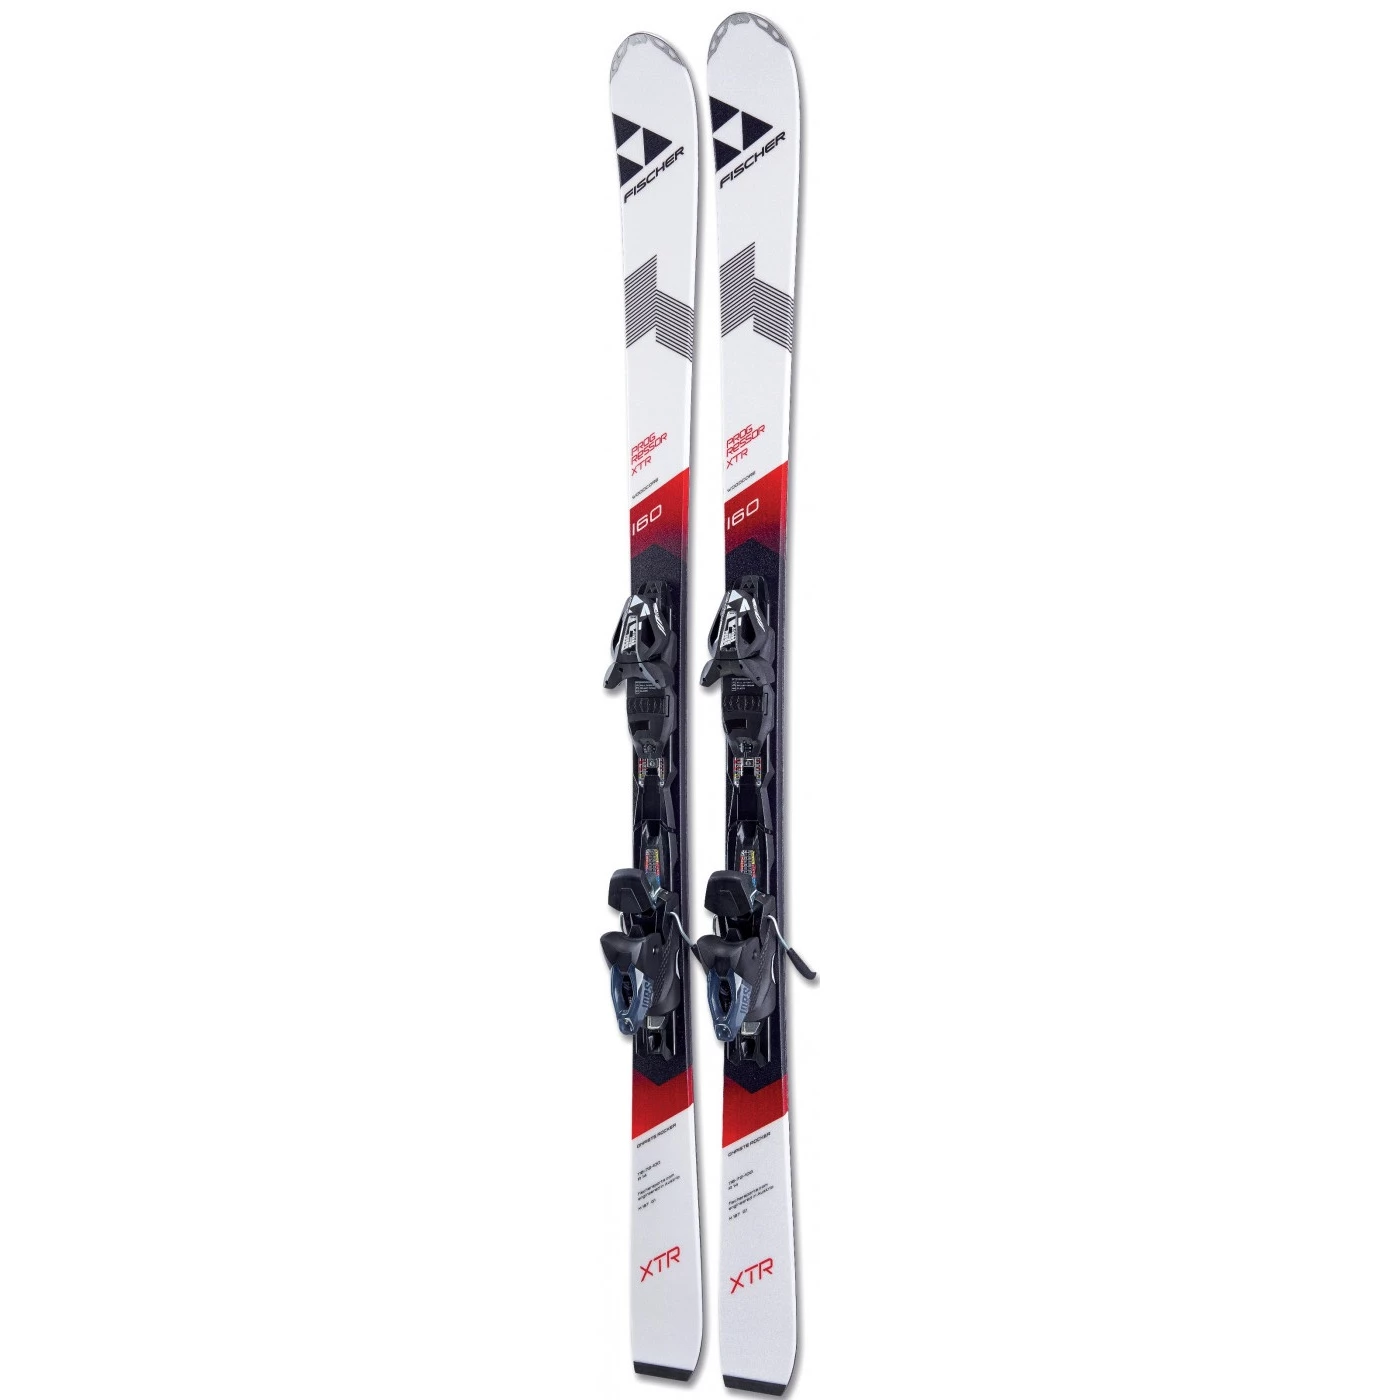 Fischer XTR Comp sportcarve ski's